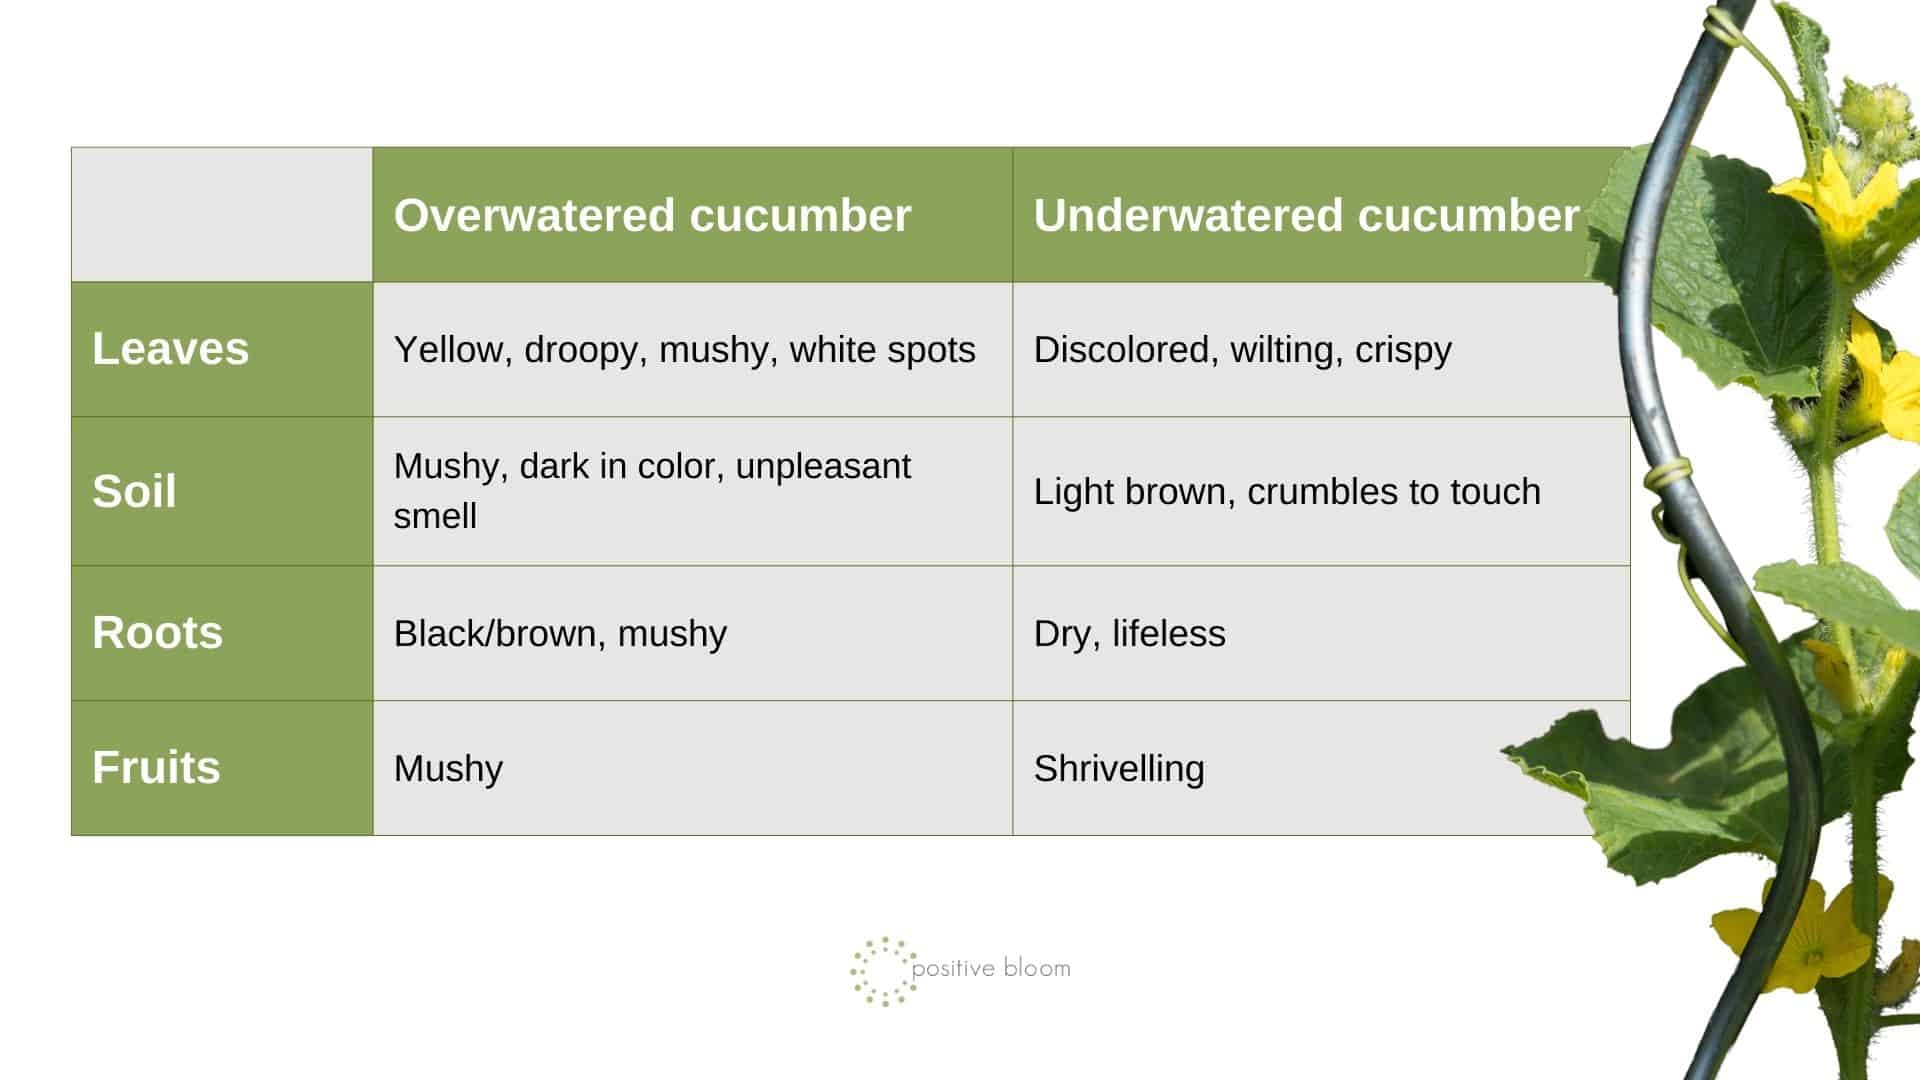 Overwatered vs Underwatered Cucumber